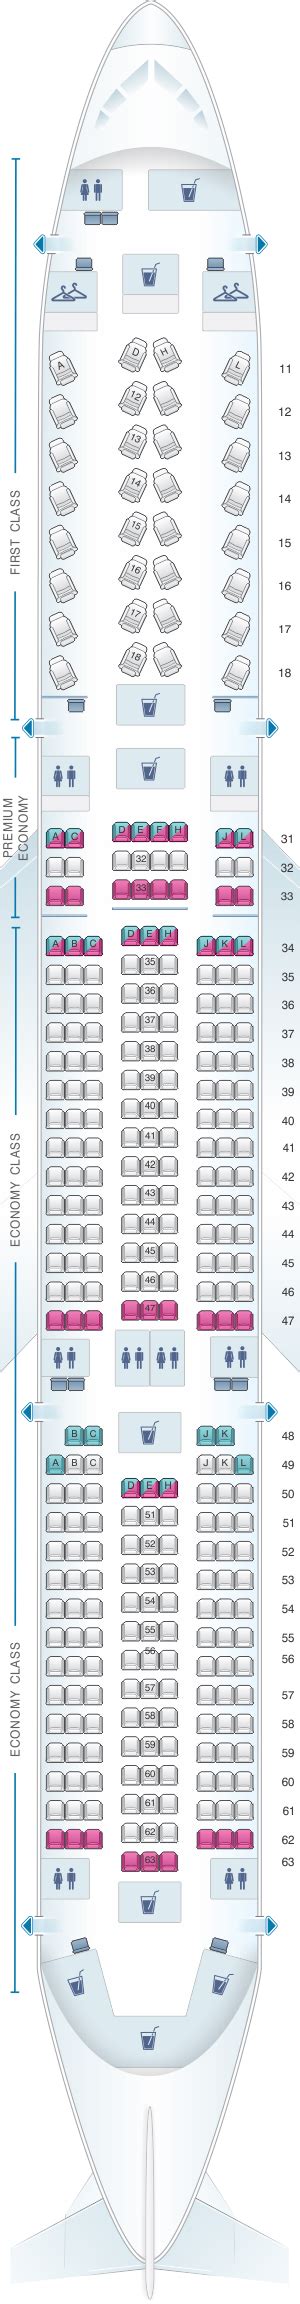 A350 Lufthansa Seat Map